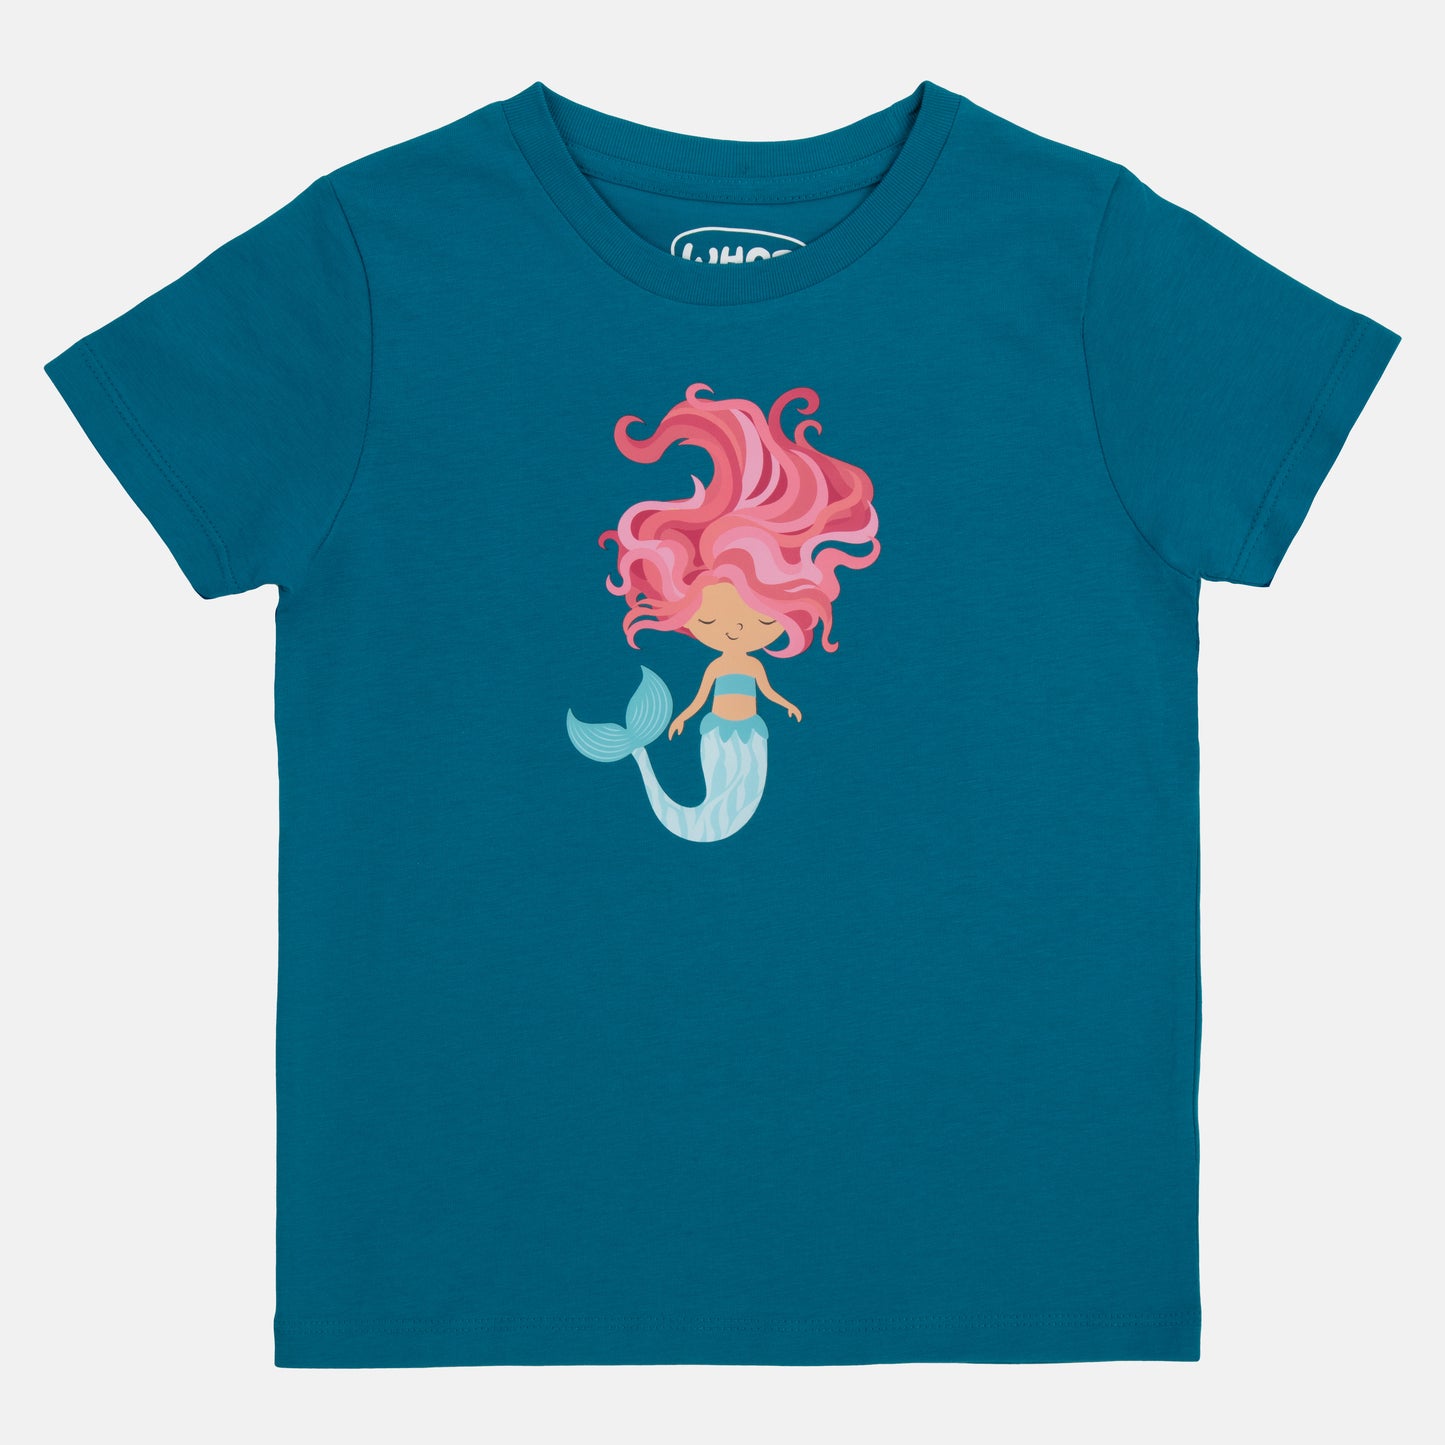 Who said nachhaltiges T-Shirt in Petrolbau mit Meerjungfrau